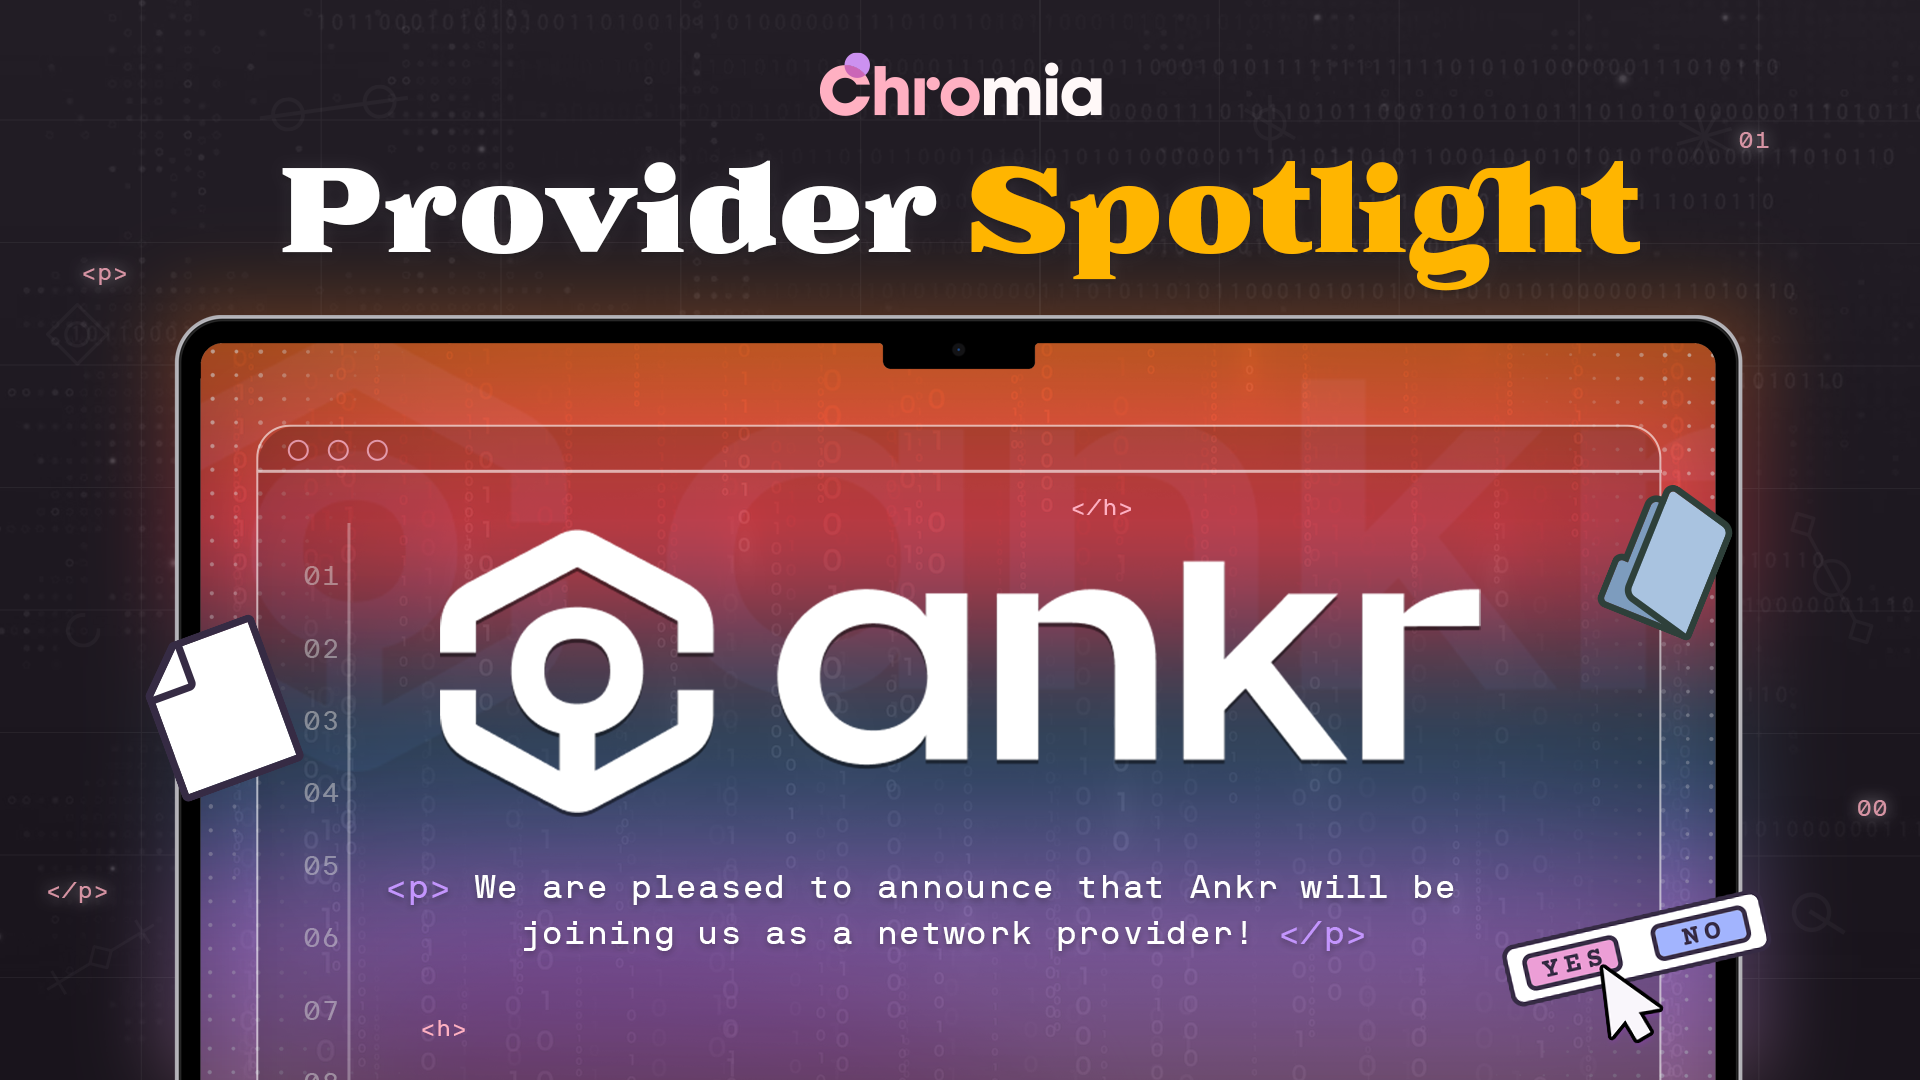 Chromia Provider Spotlight: Ankr